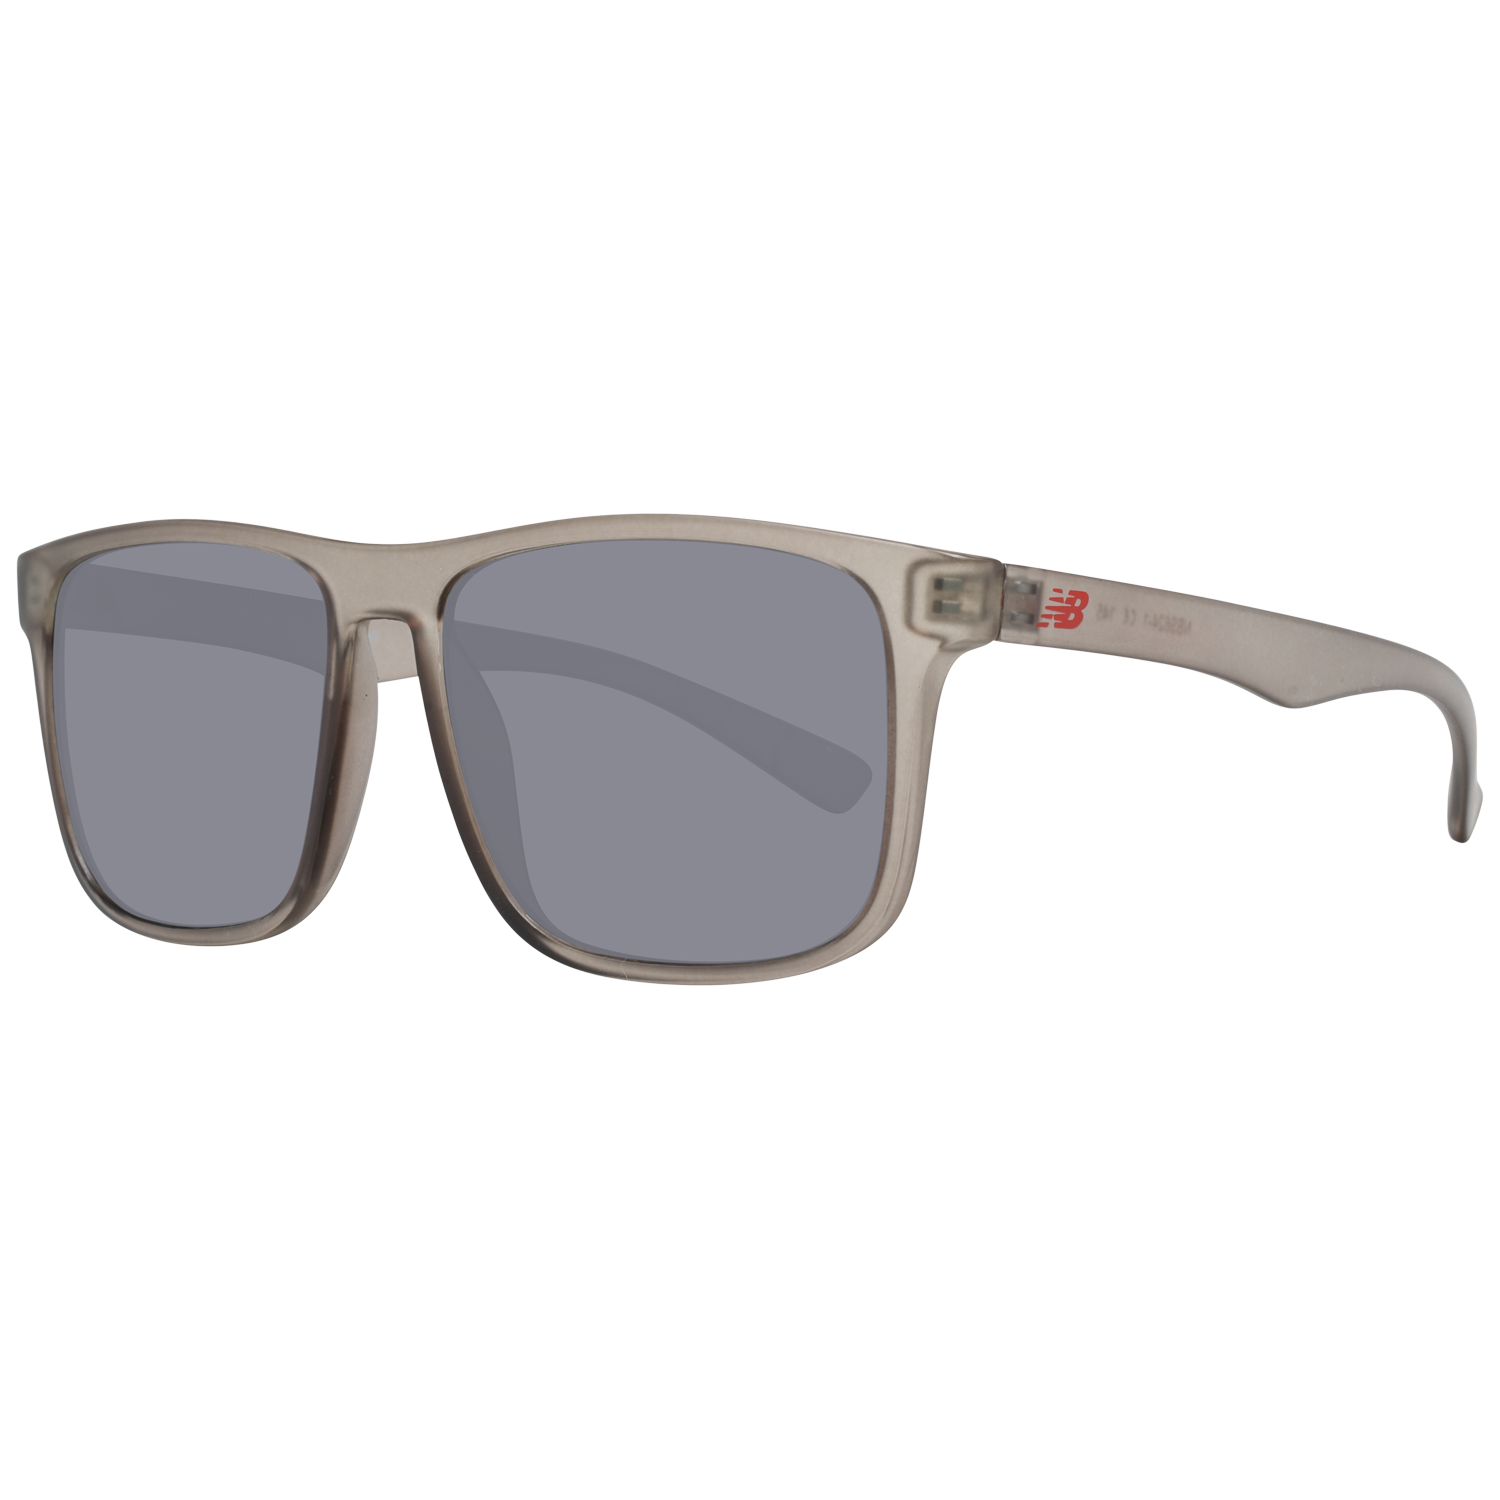 New Balance Sunglasses NB6240 C01 53 Grey